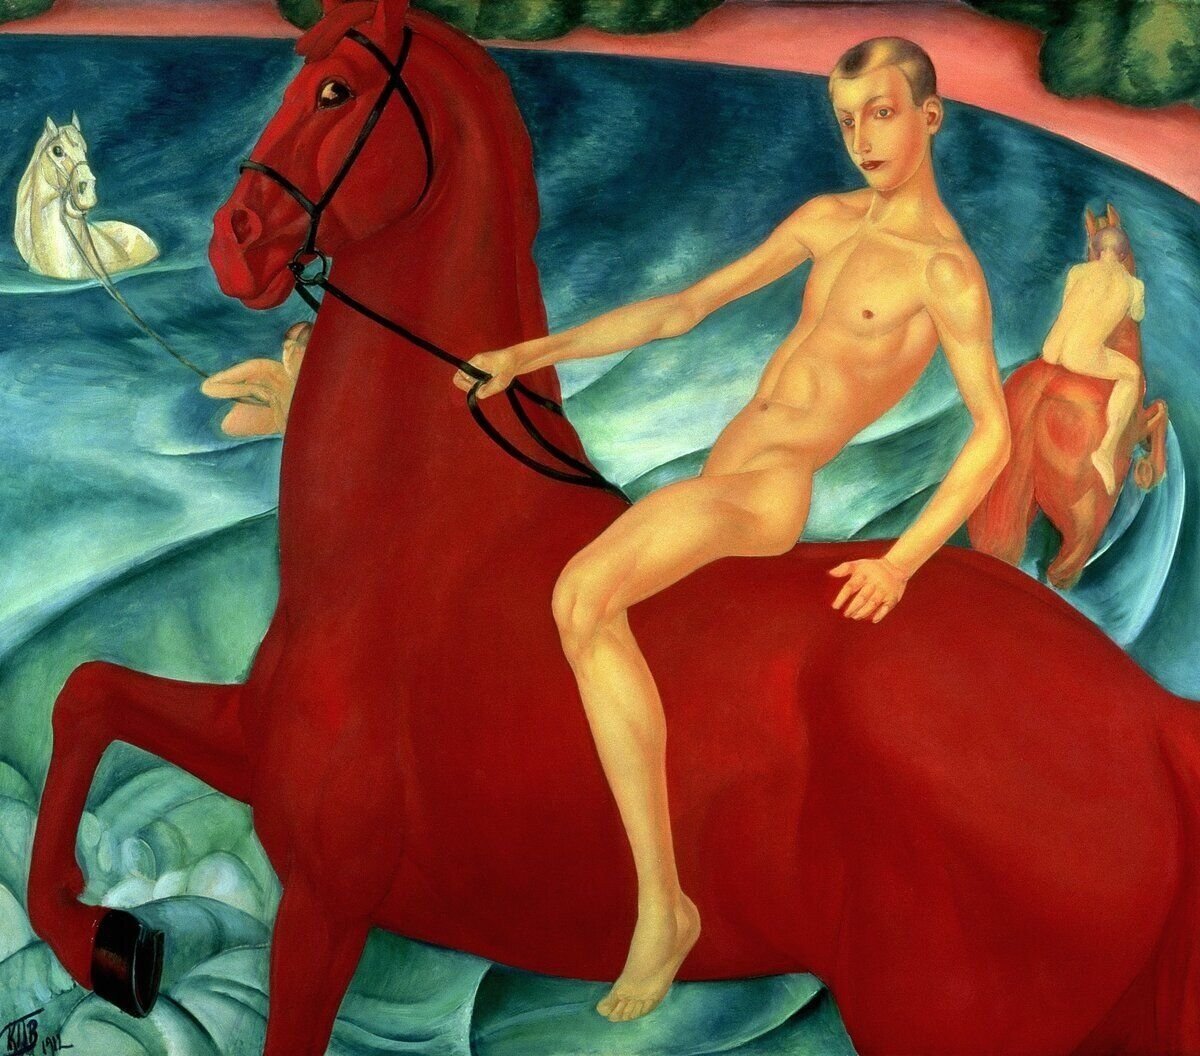 Кузьма Петров-Водкин "Купание красного коня". 1912 г. Холст, масло. 160 × 186 см